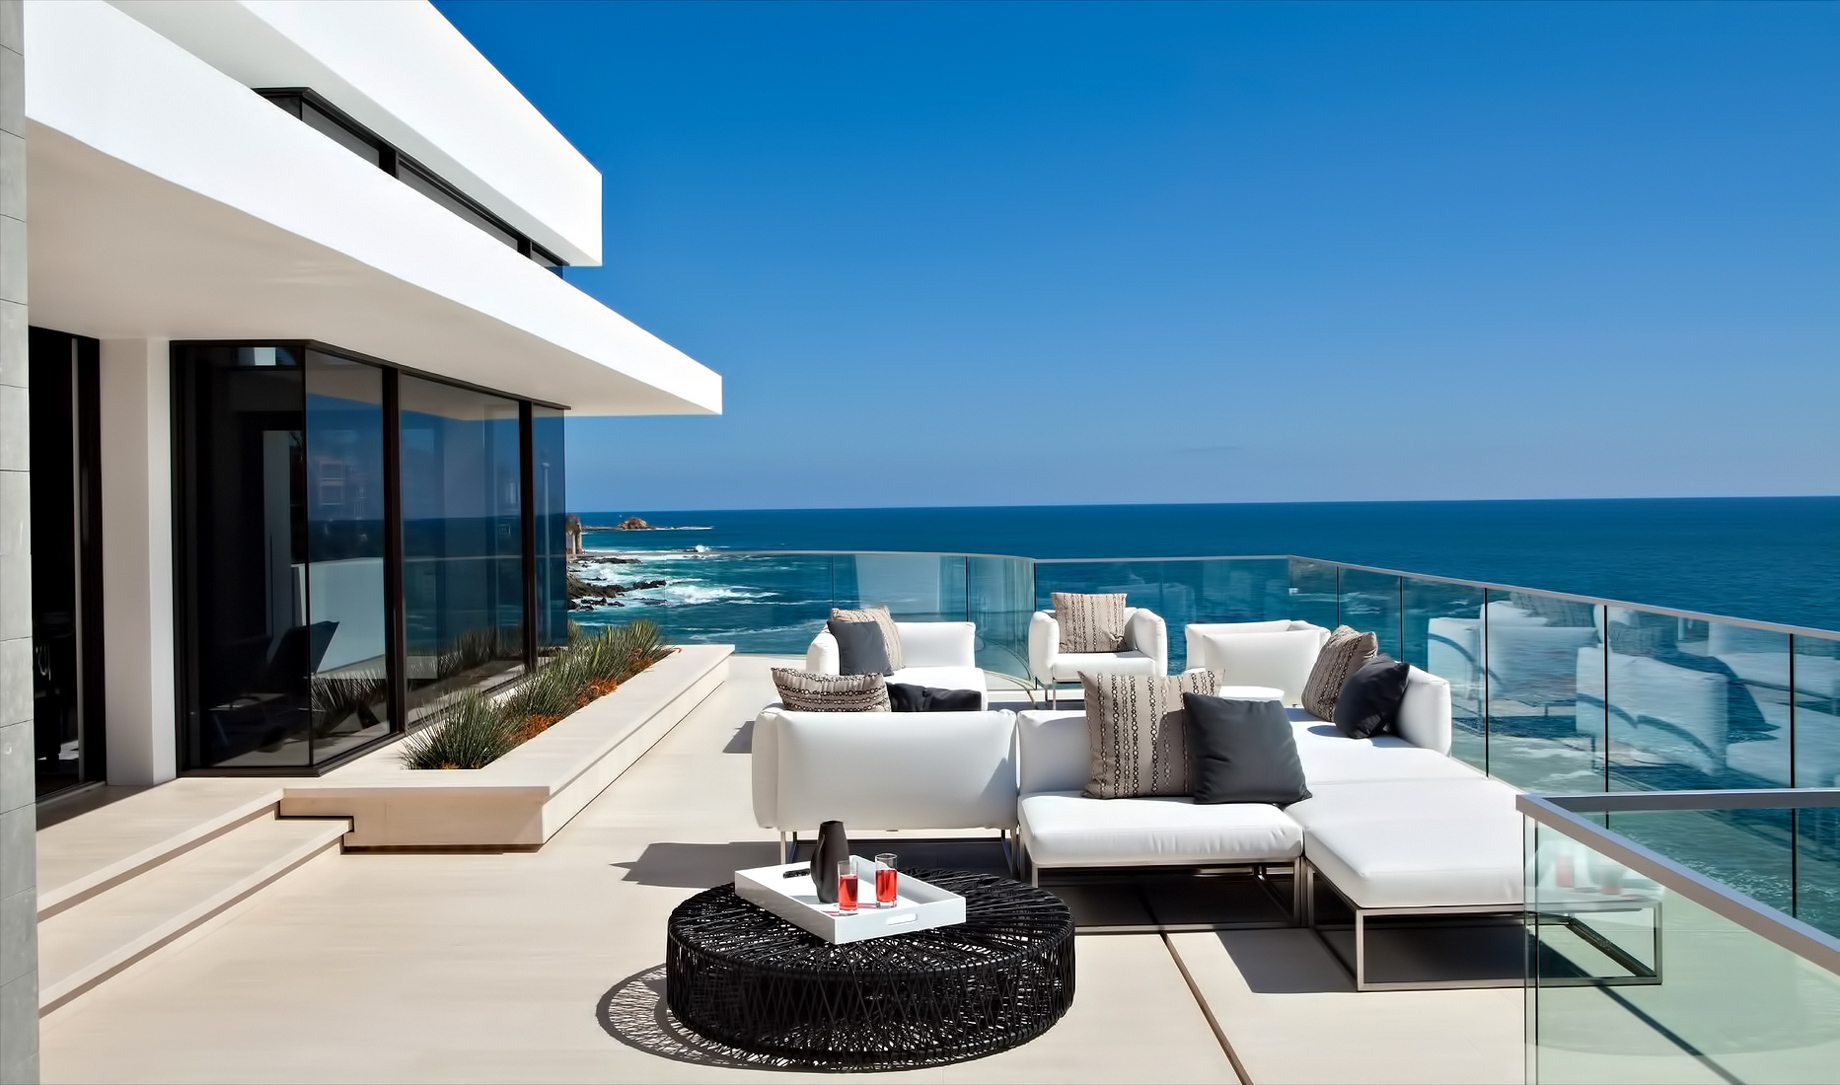 Rockledge Luxury Residence - 2317 S Coast Hwy, Laguna Beach, CA, USA